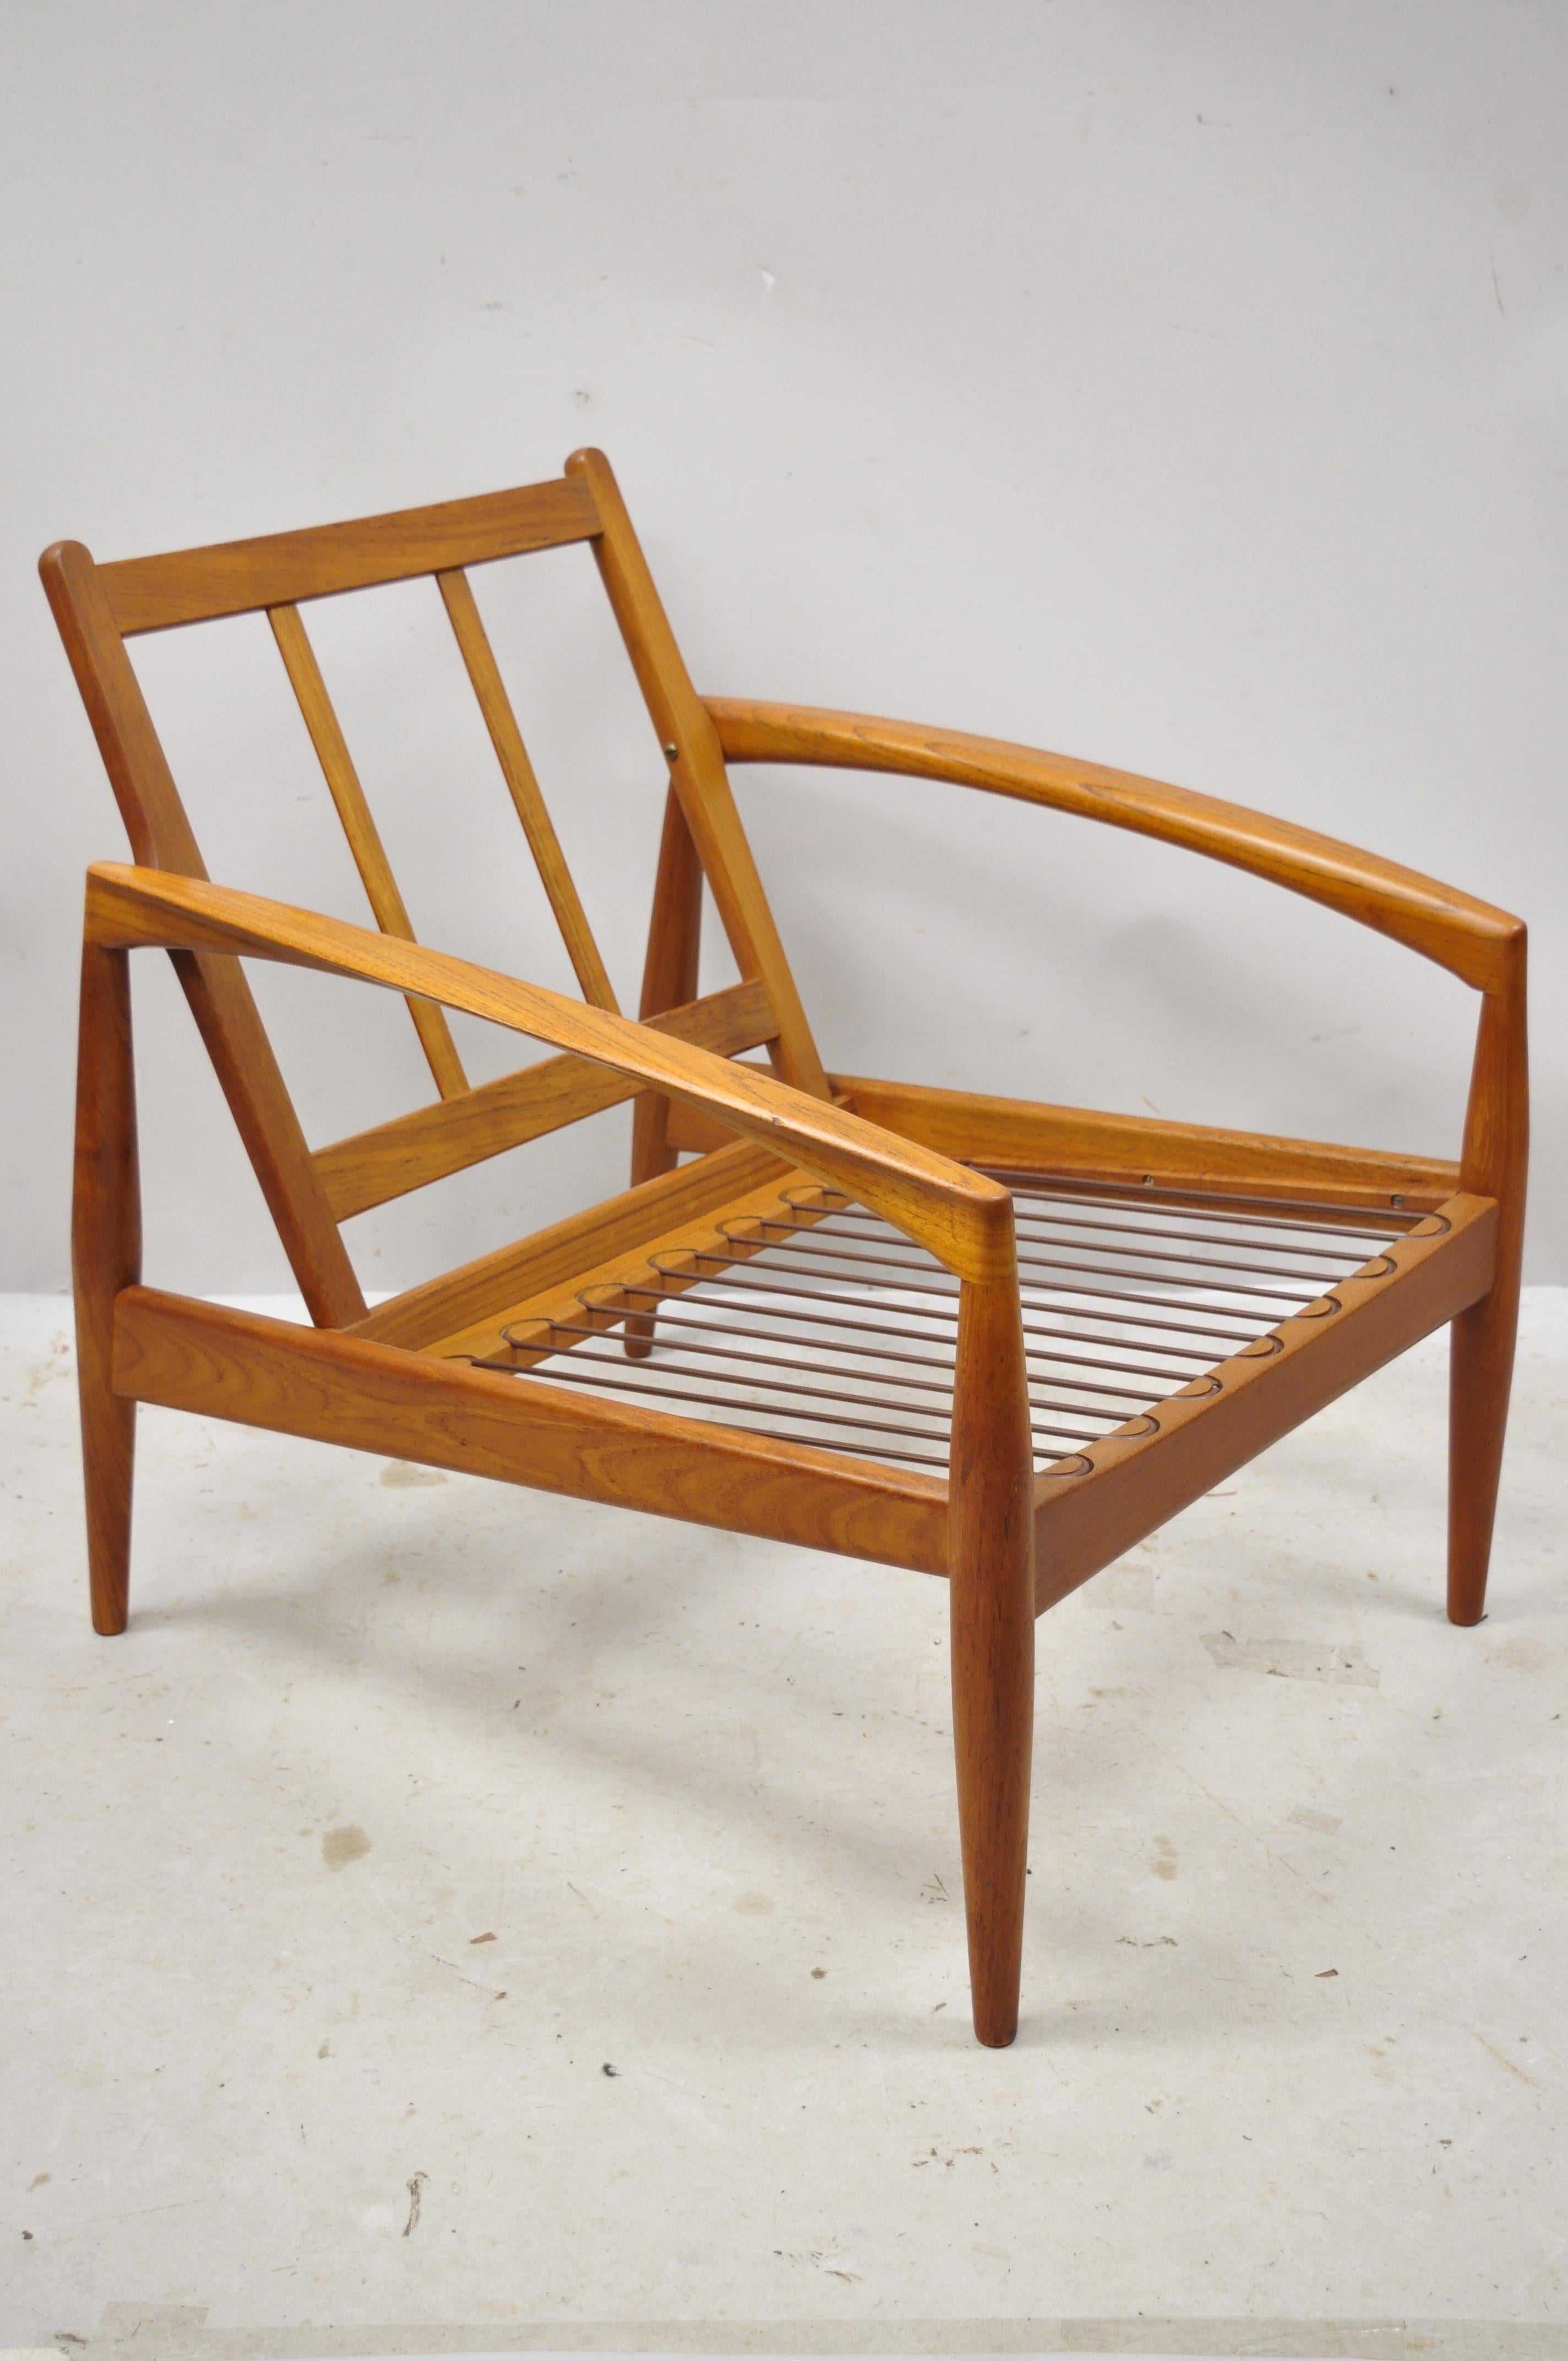 Kai Kristiansen Magnus Olesen paper knife teak Danish modern lounge chair. Item features a solid teak wood frame, beautiful wood grain, original label, clean modernist lines, sleek sculptural form, circa mid-20th century. Measurements: 28